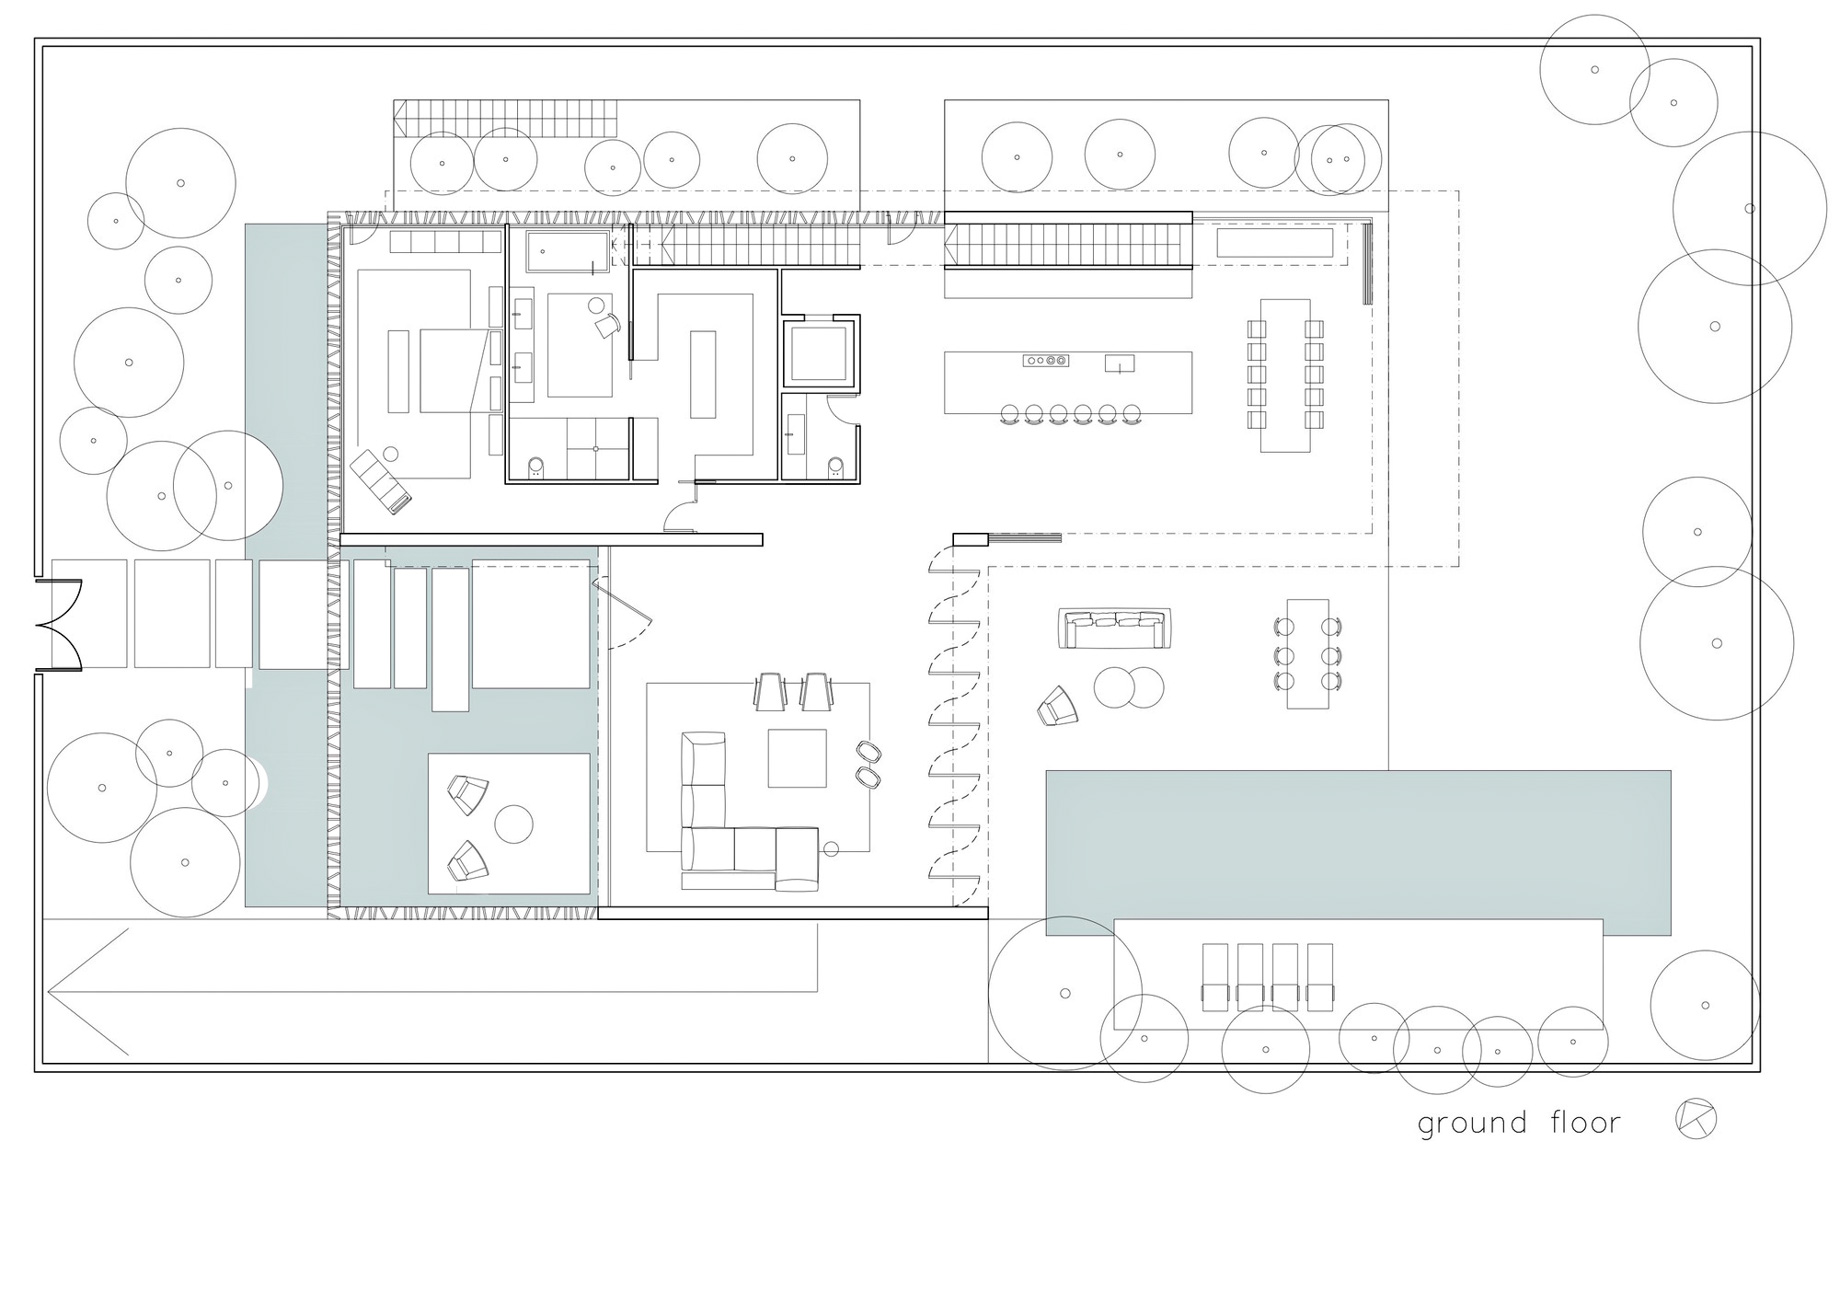 Ground Floor Plan - S House Luxury Residence - Herzliya, Tel Aviv, Israel